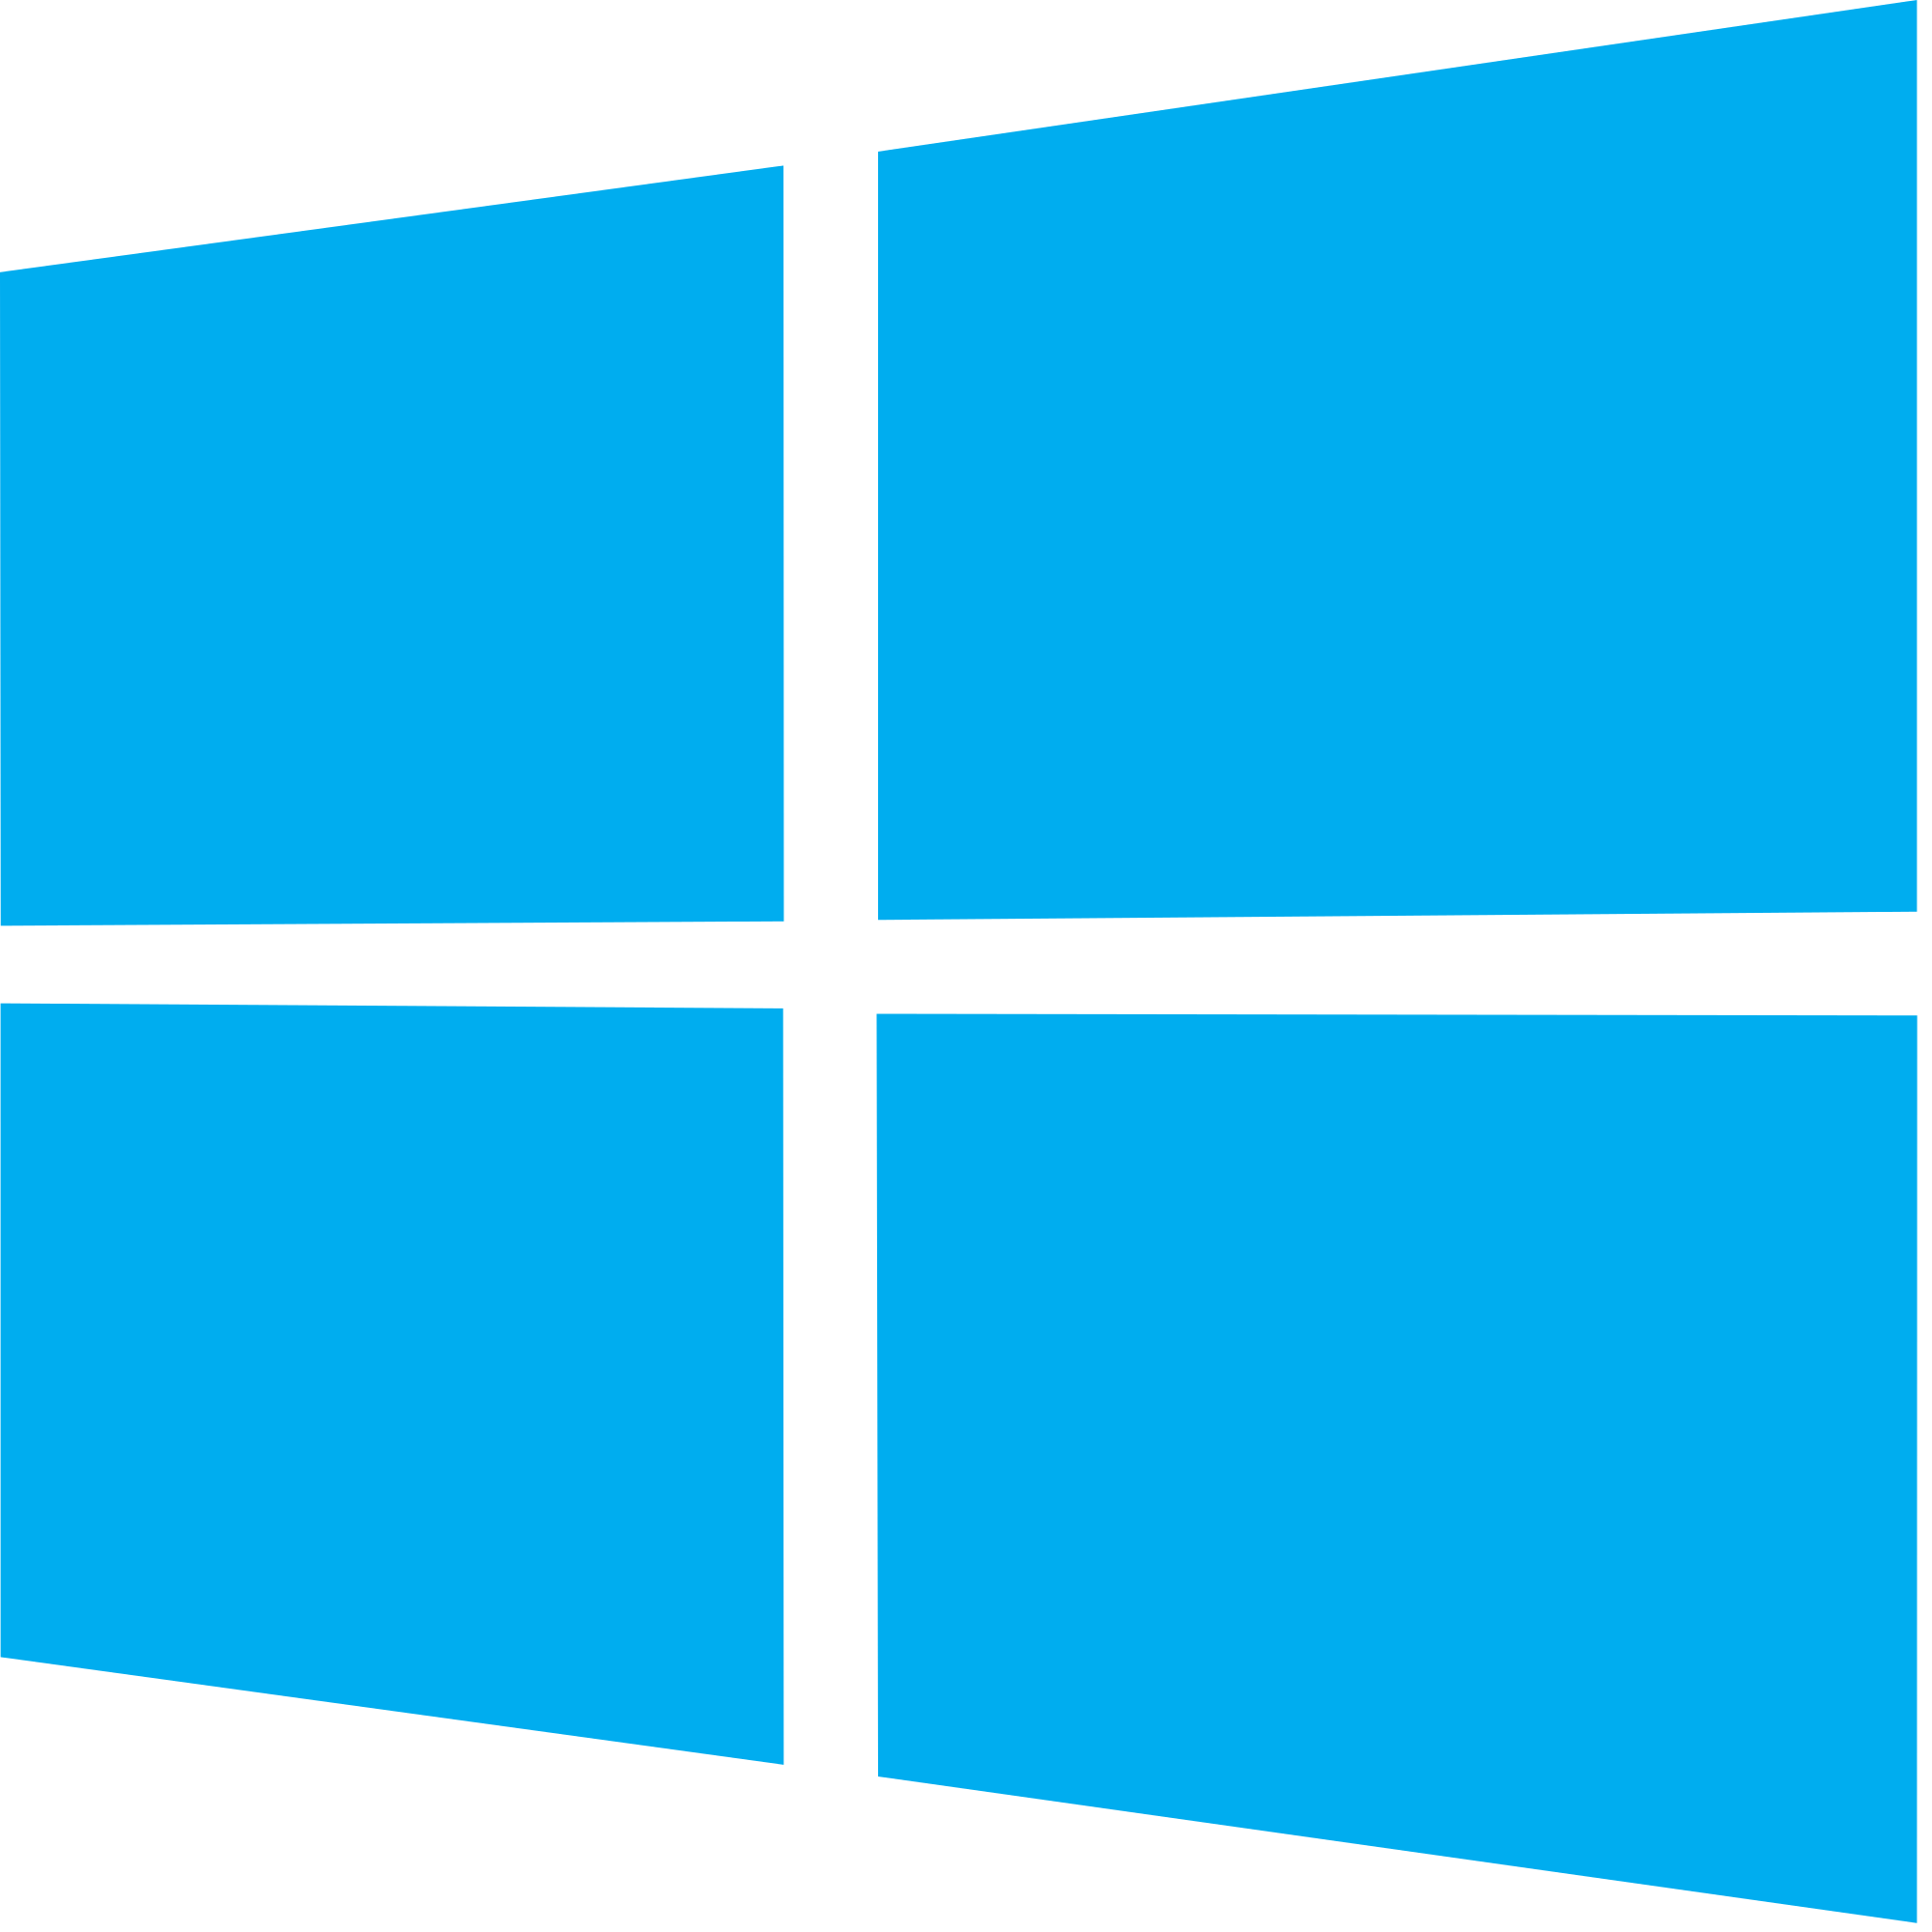 Operation system Windows